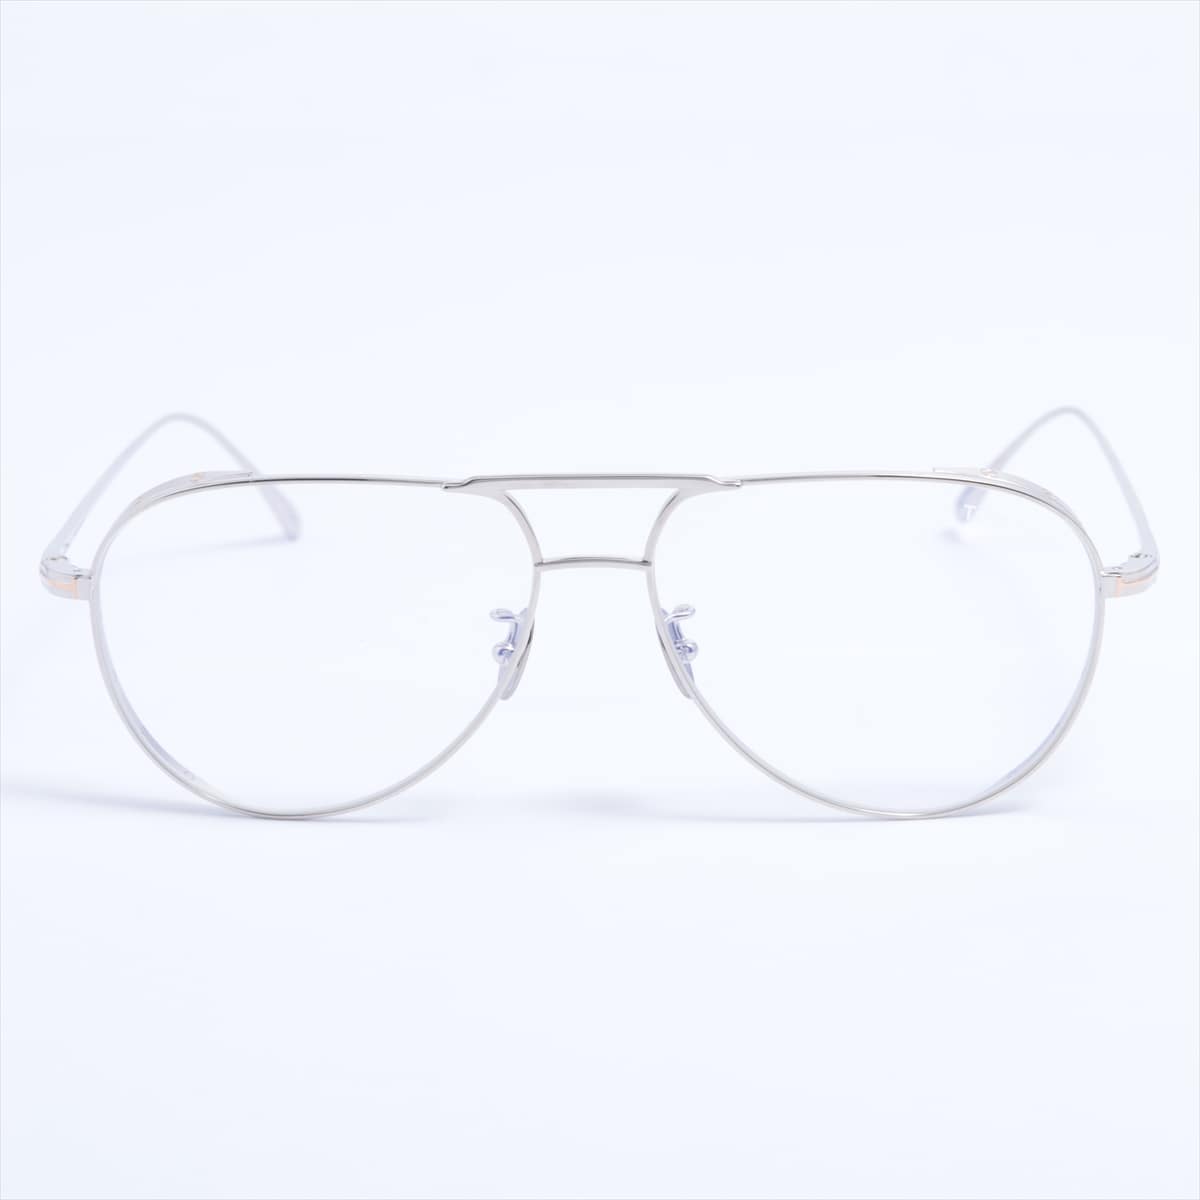 Tom Ford TF5658 Sunglasses Titanium Silver Lens tinted Degree